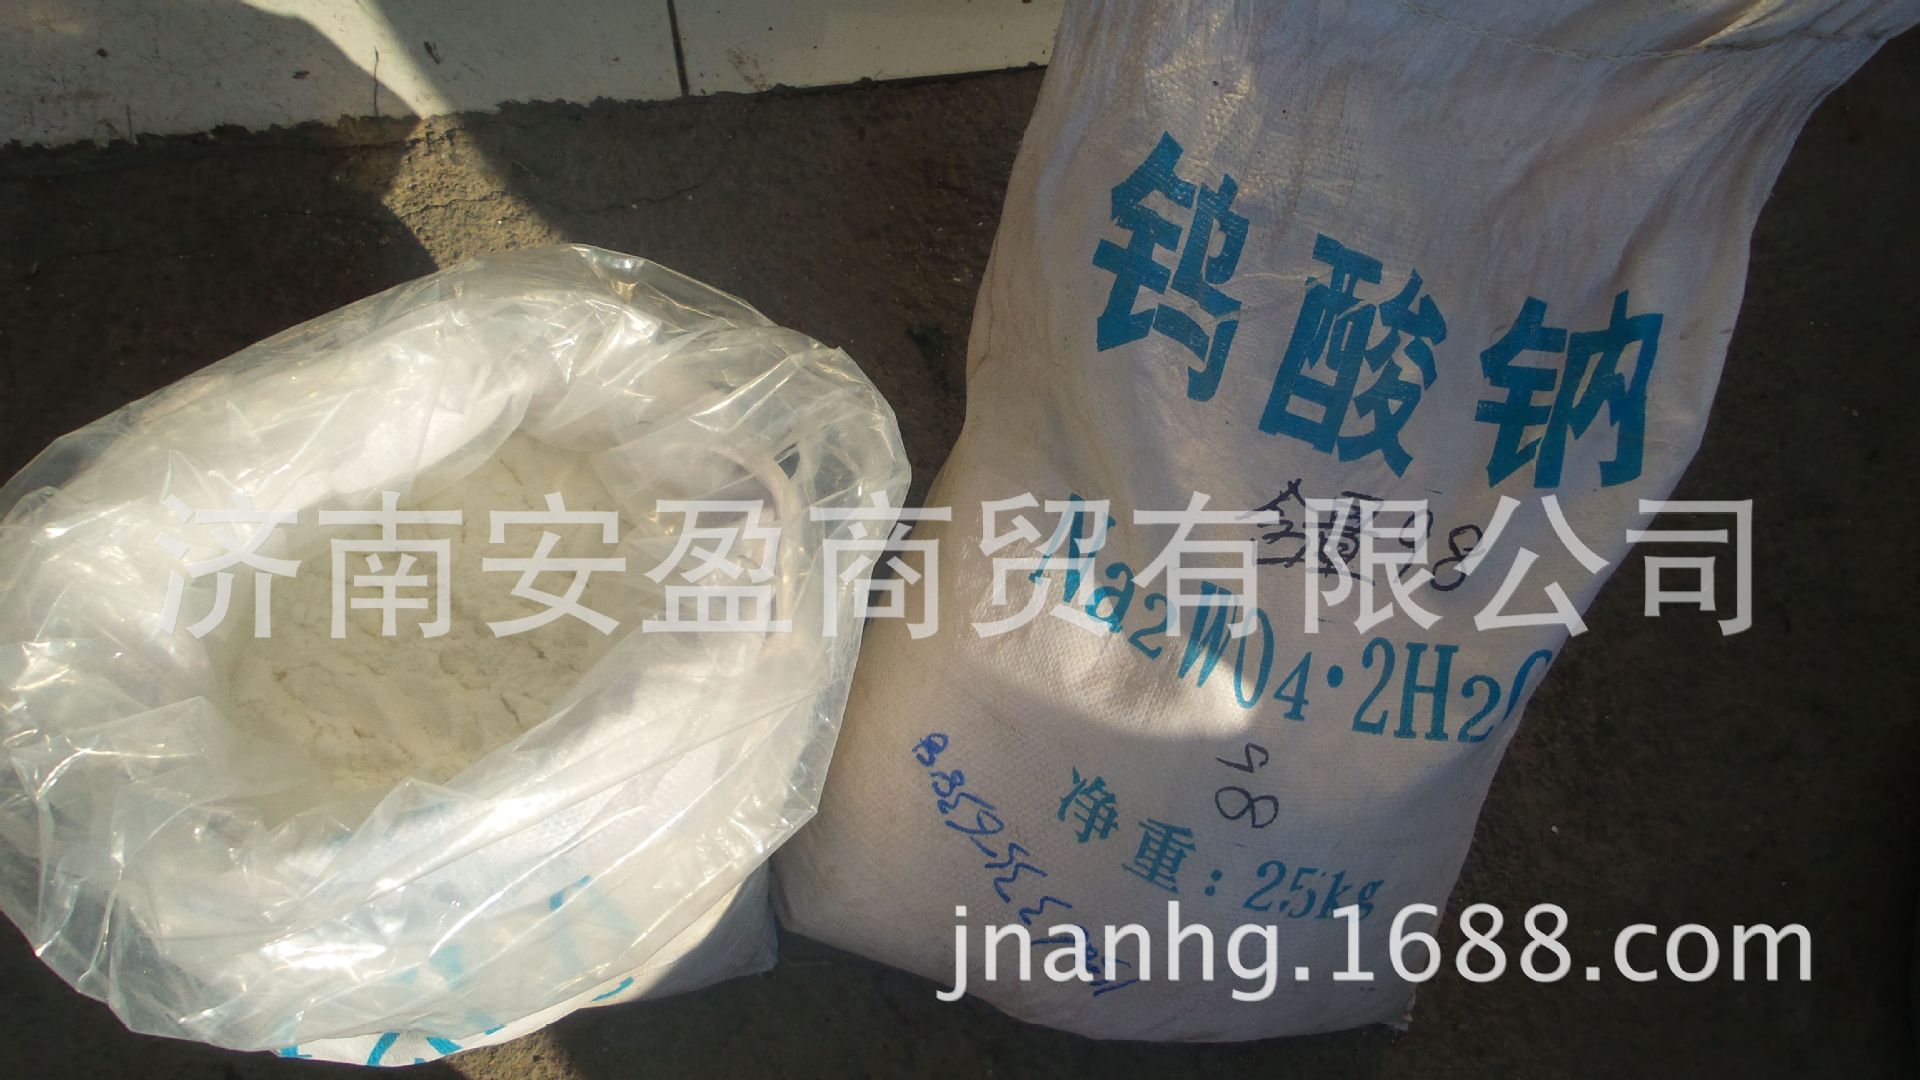 Jinan supply Sodium tungstate Industrial grade Sodium tungstate Sodium tungstate hydrate National standard sodium tungstate